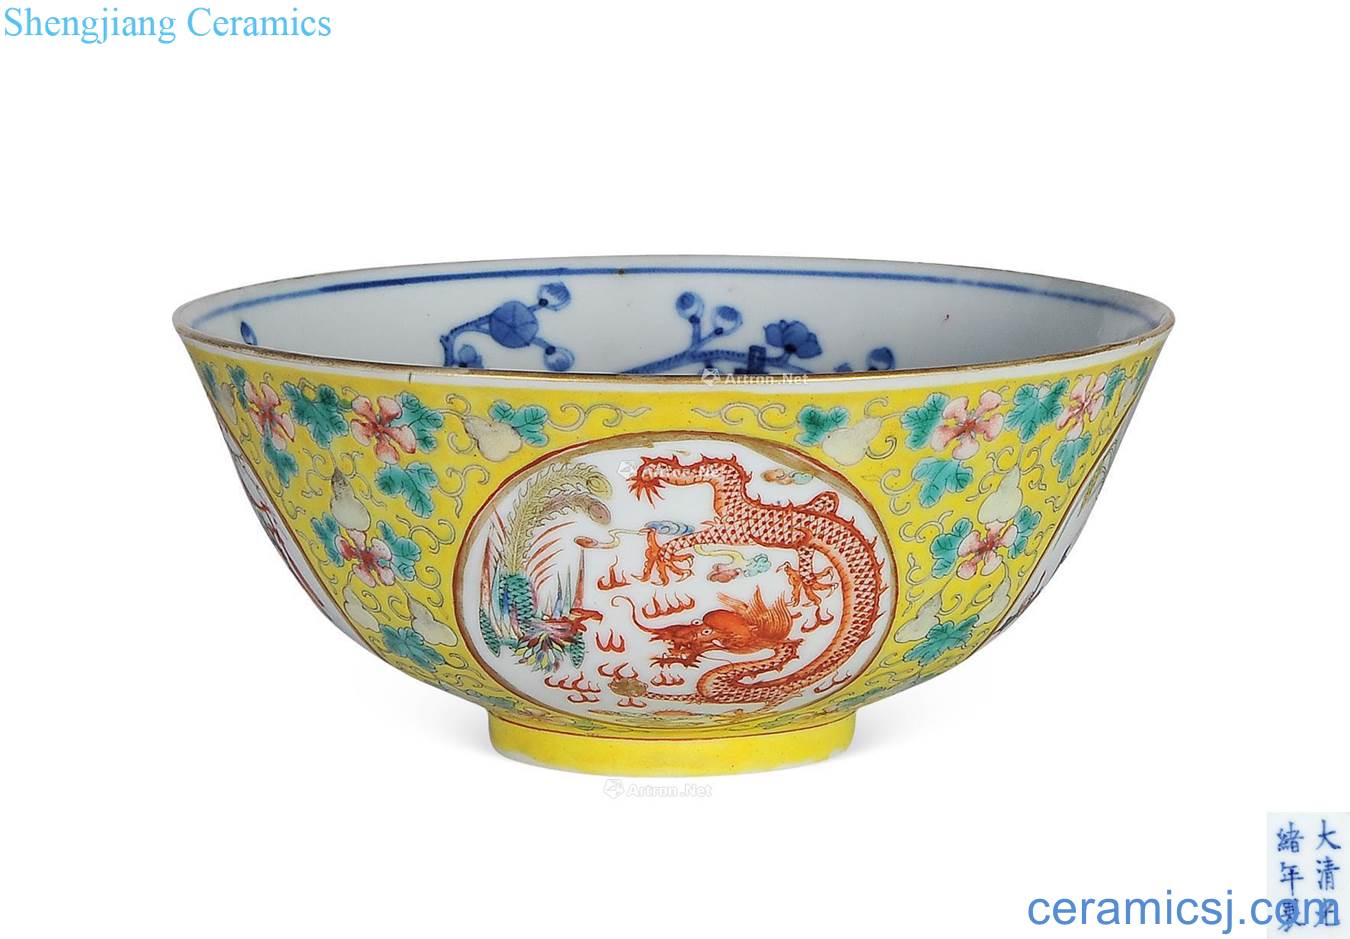 Pastel reign of qing emperor guangxu medallion longfeng green-splashed bowls